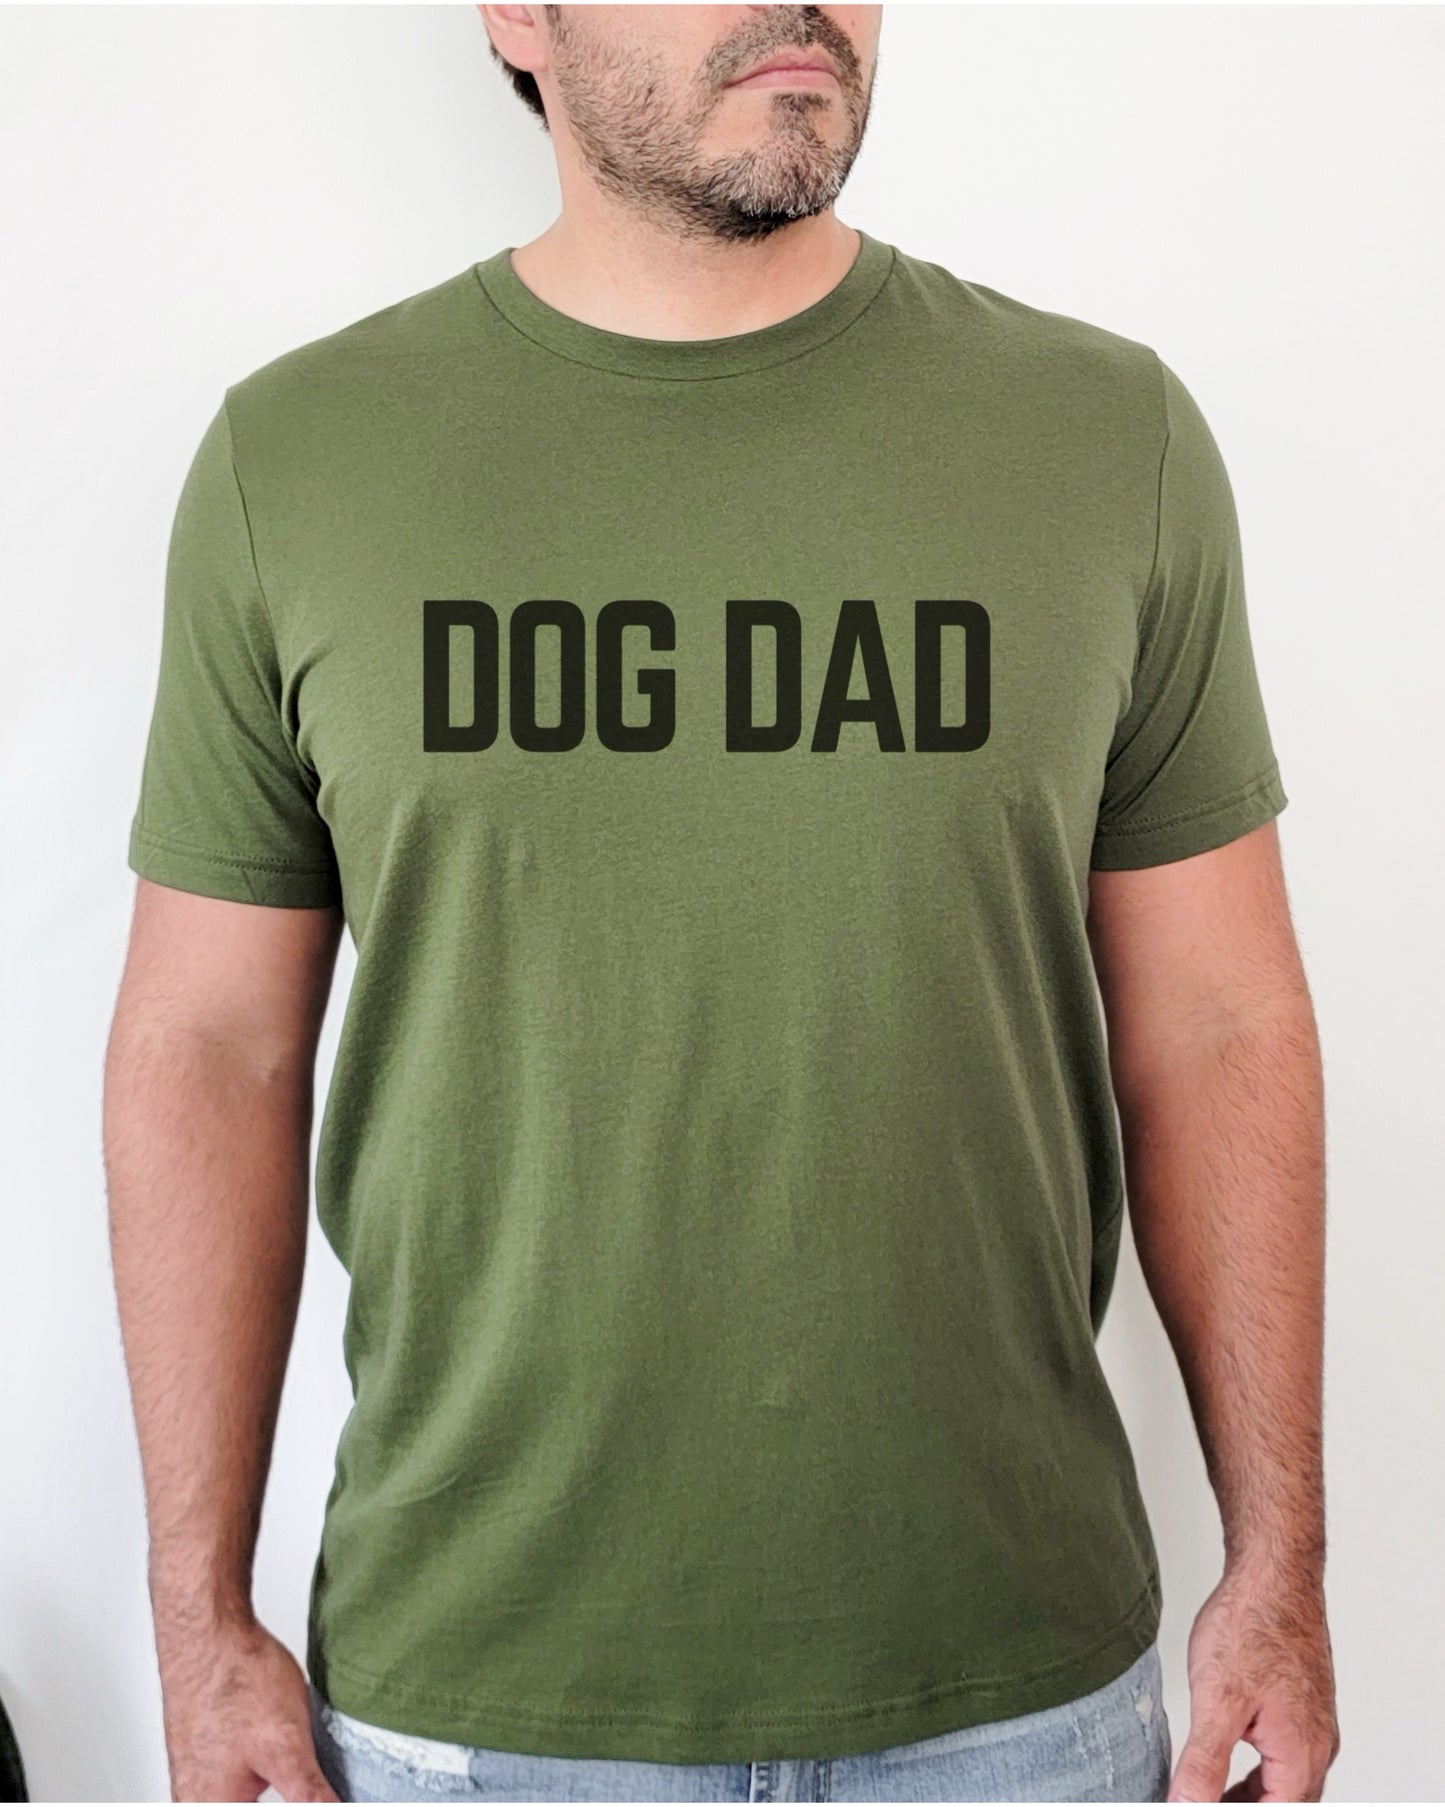 DOG DAD - MILITARY GREEN TSHIRT